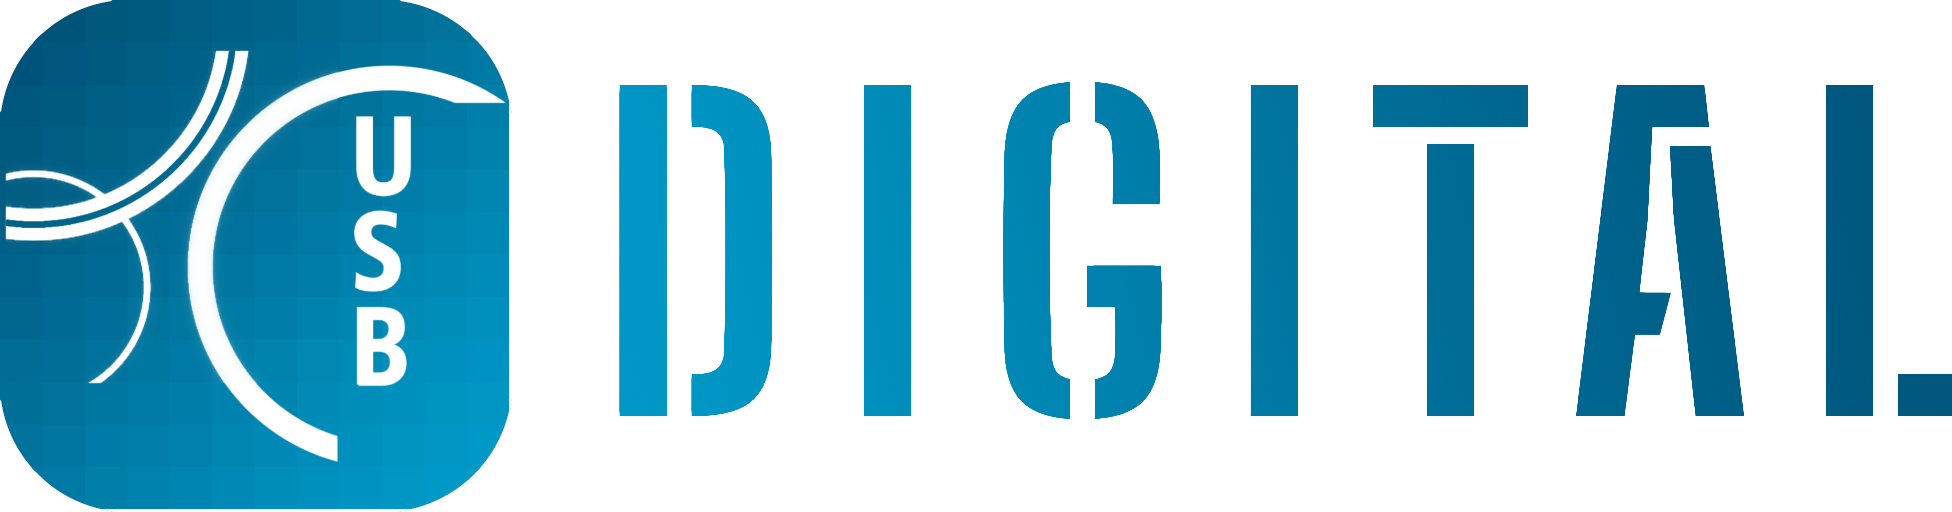 USB Digital Logo